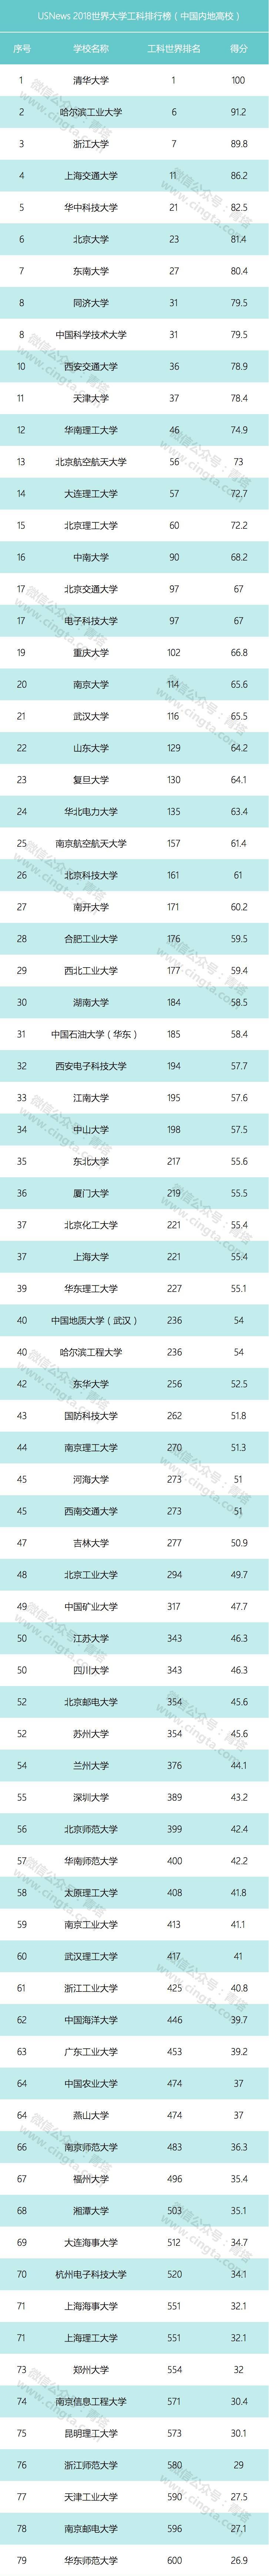 USNews 2018世界大学工科排行榜出炉 中国三所学校进入前十名2